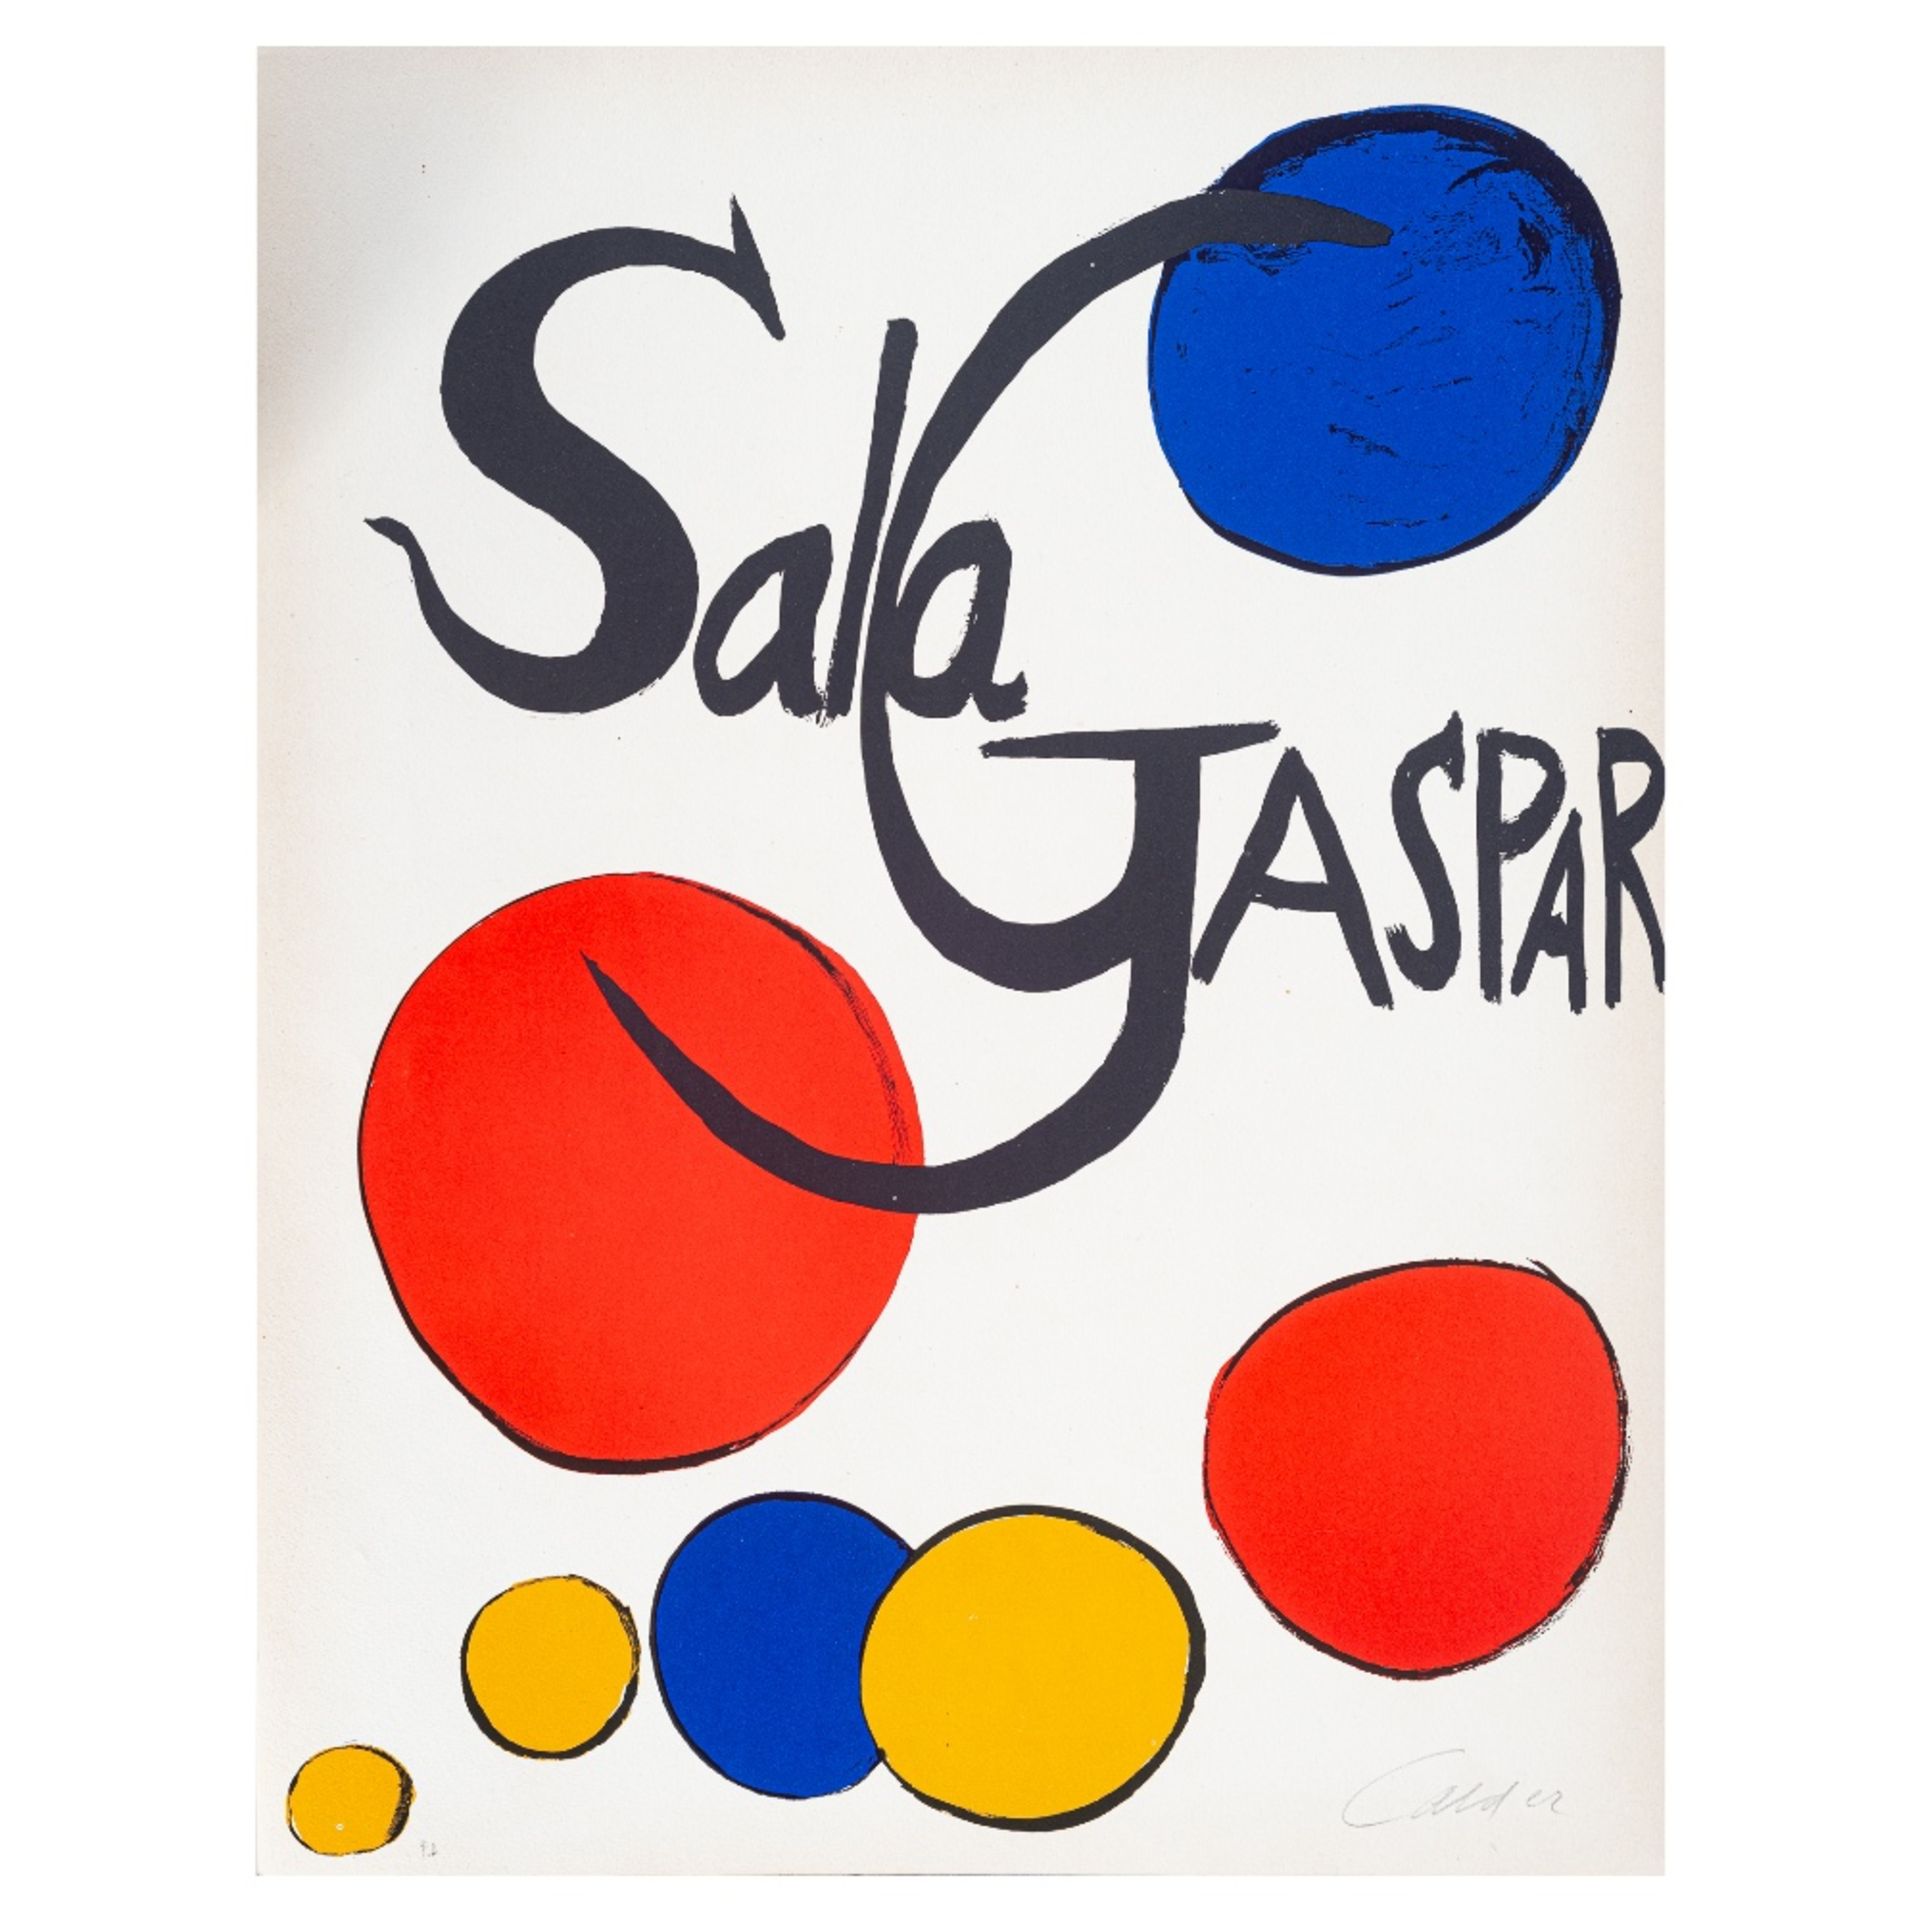 Alexander Calder. Sala Gaspar. 